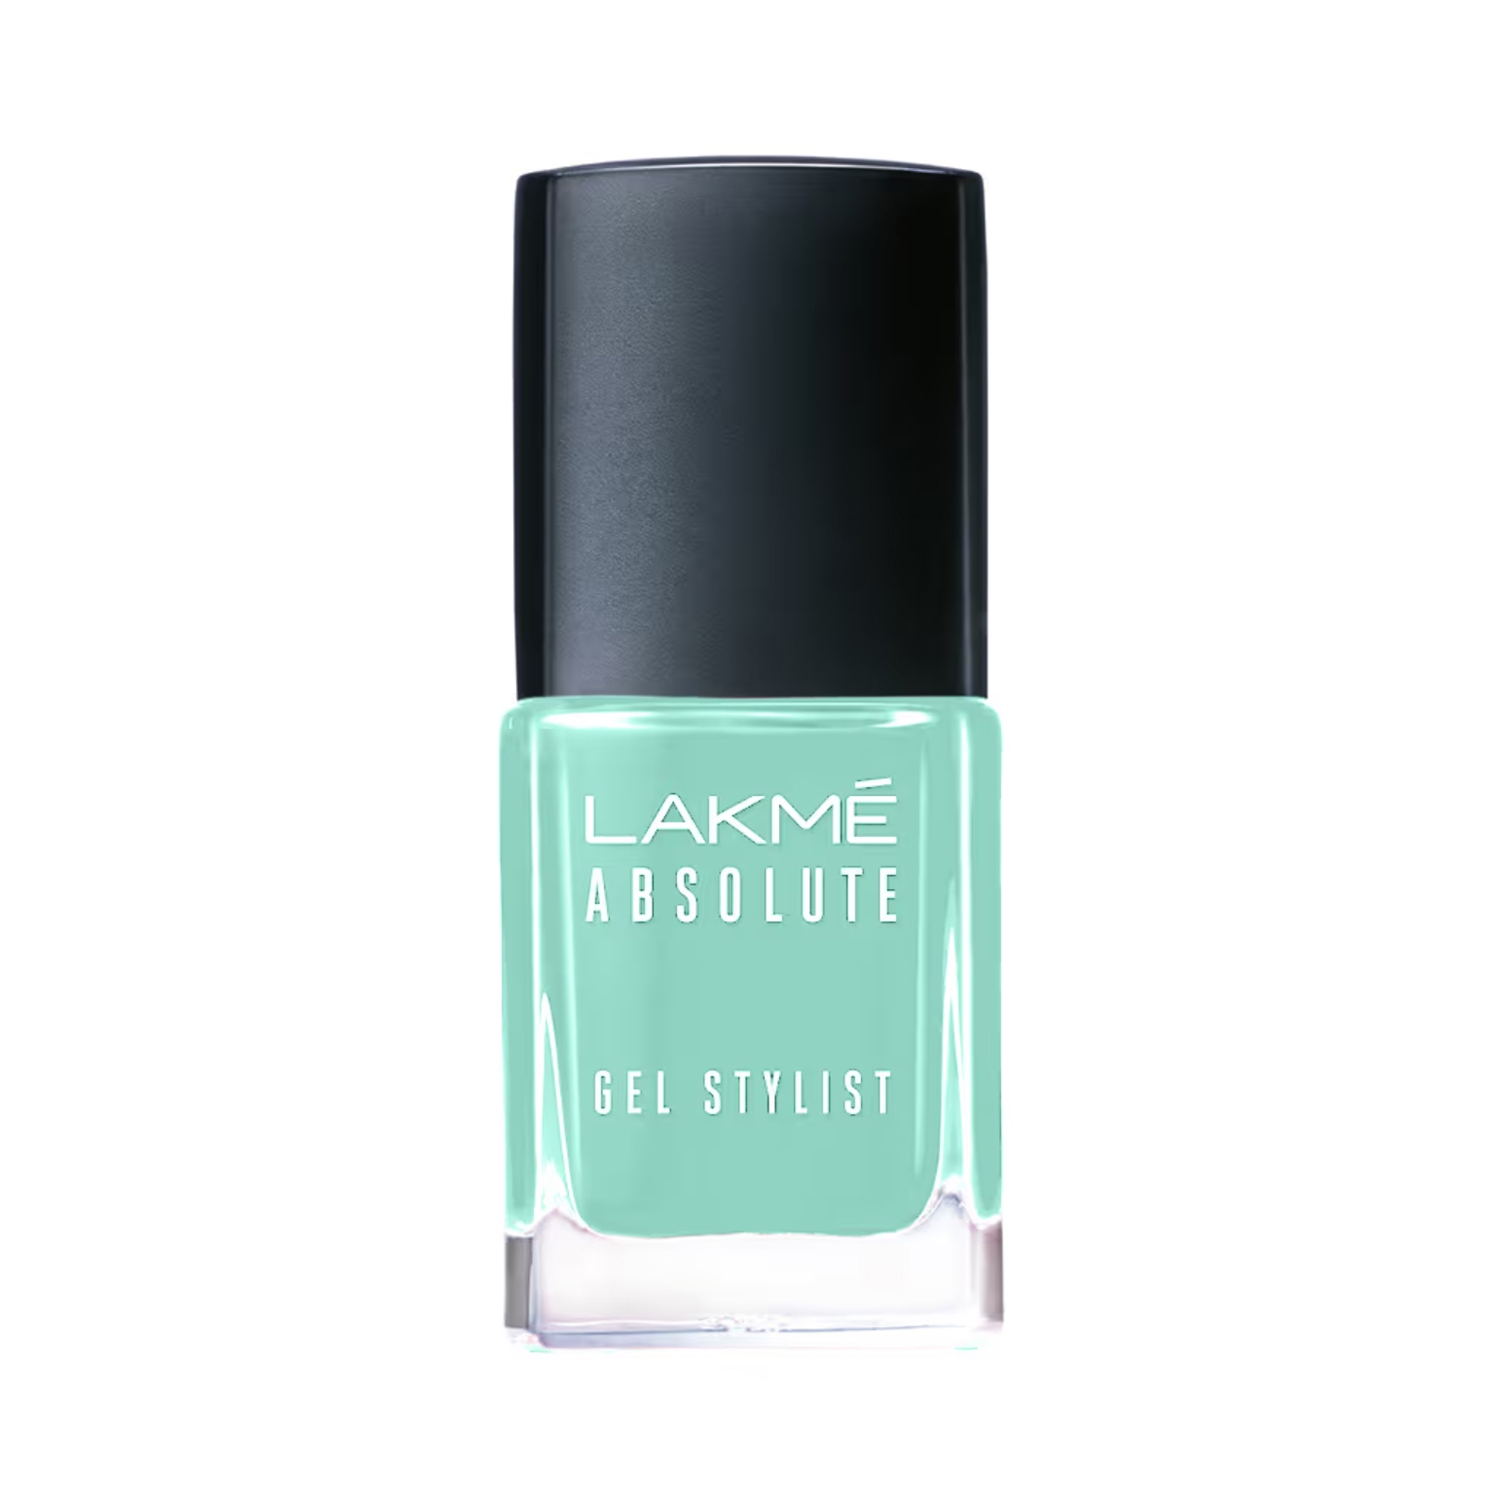 Lakme | Lakme Absolute Gel Stylist Nail Polish - Summer Mint (12ml)